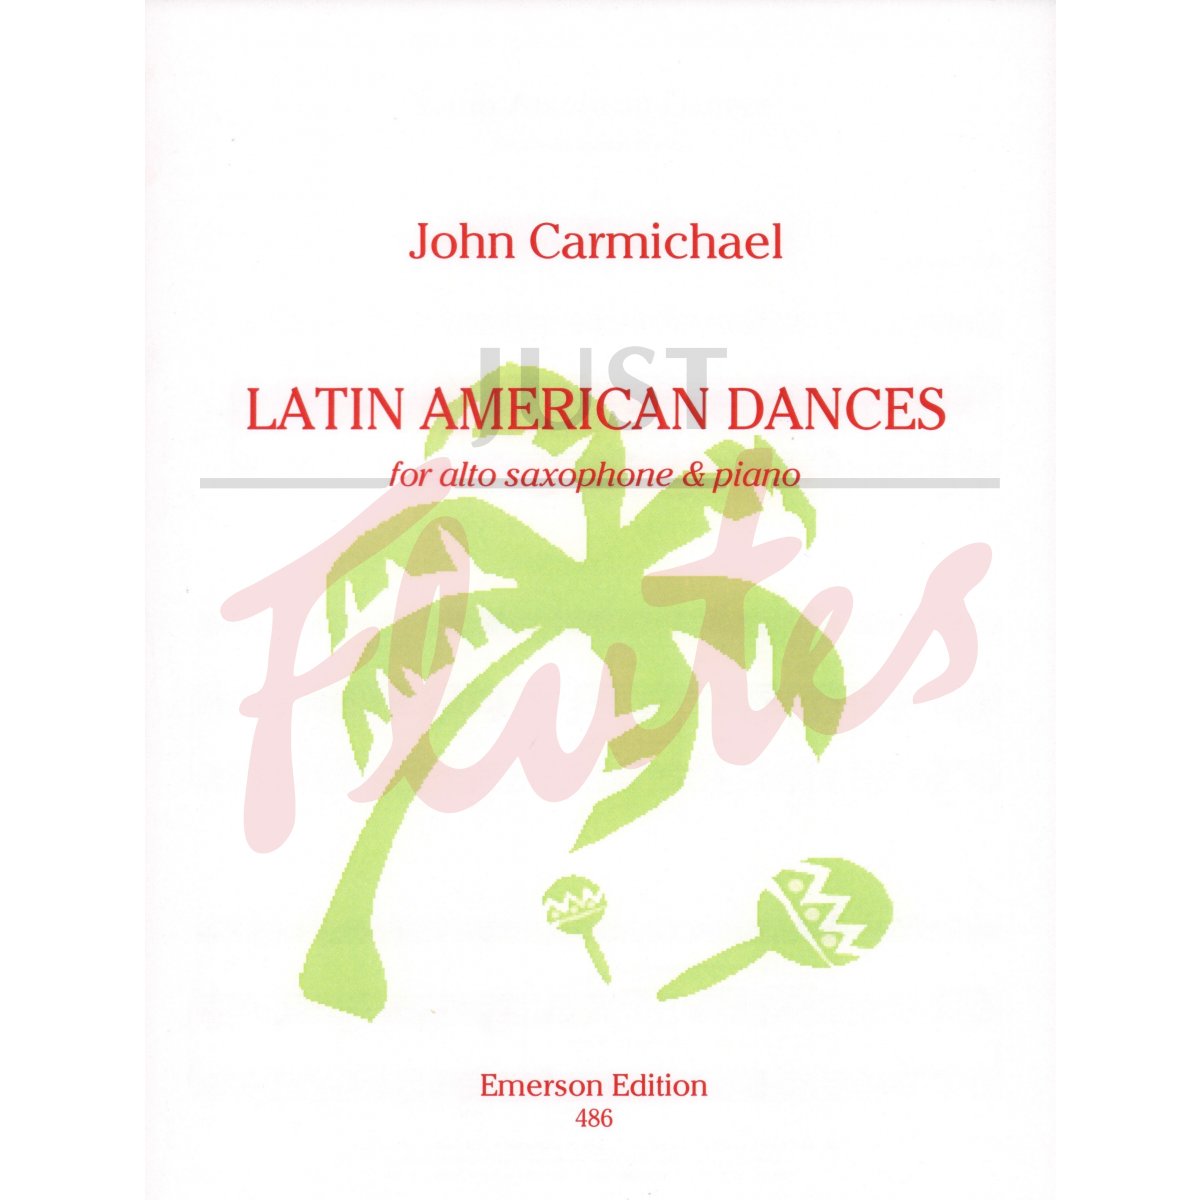 Latin American Dances for Alto Saxophone and Piano